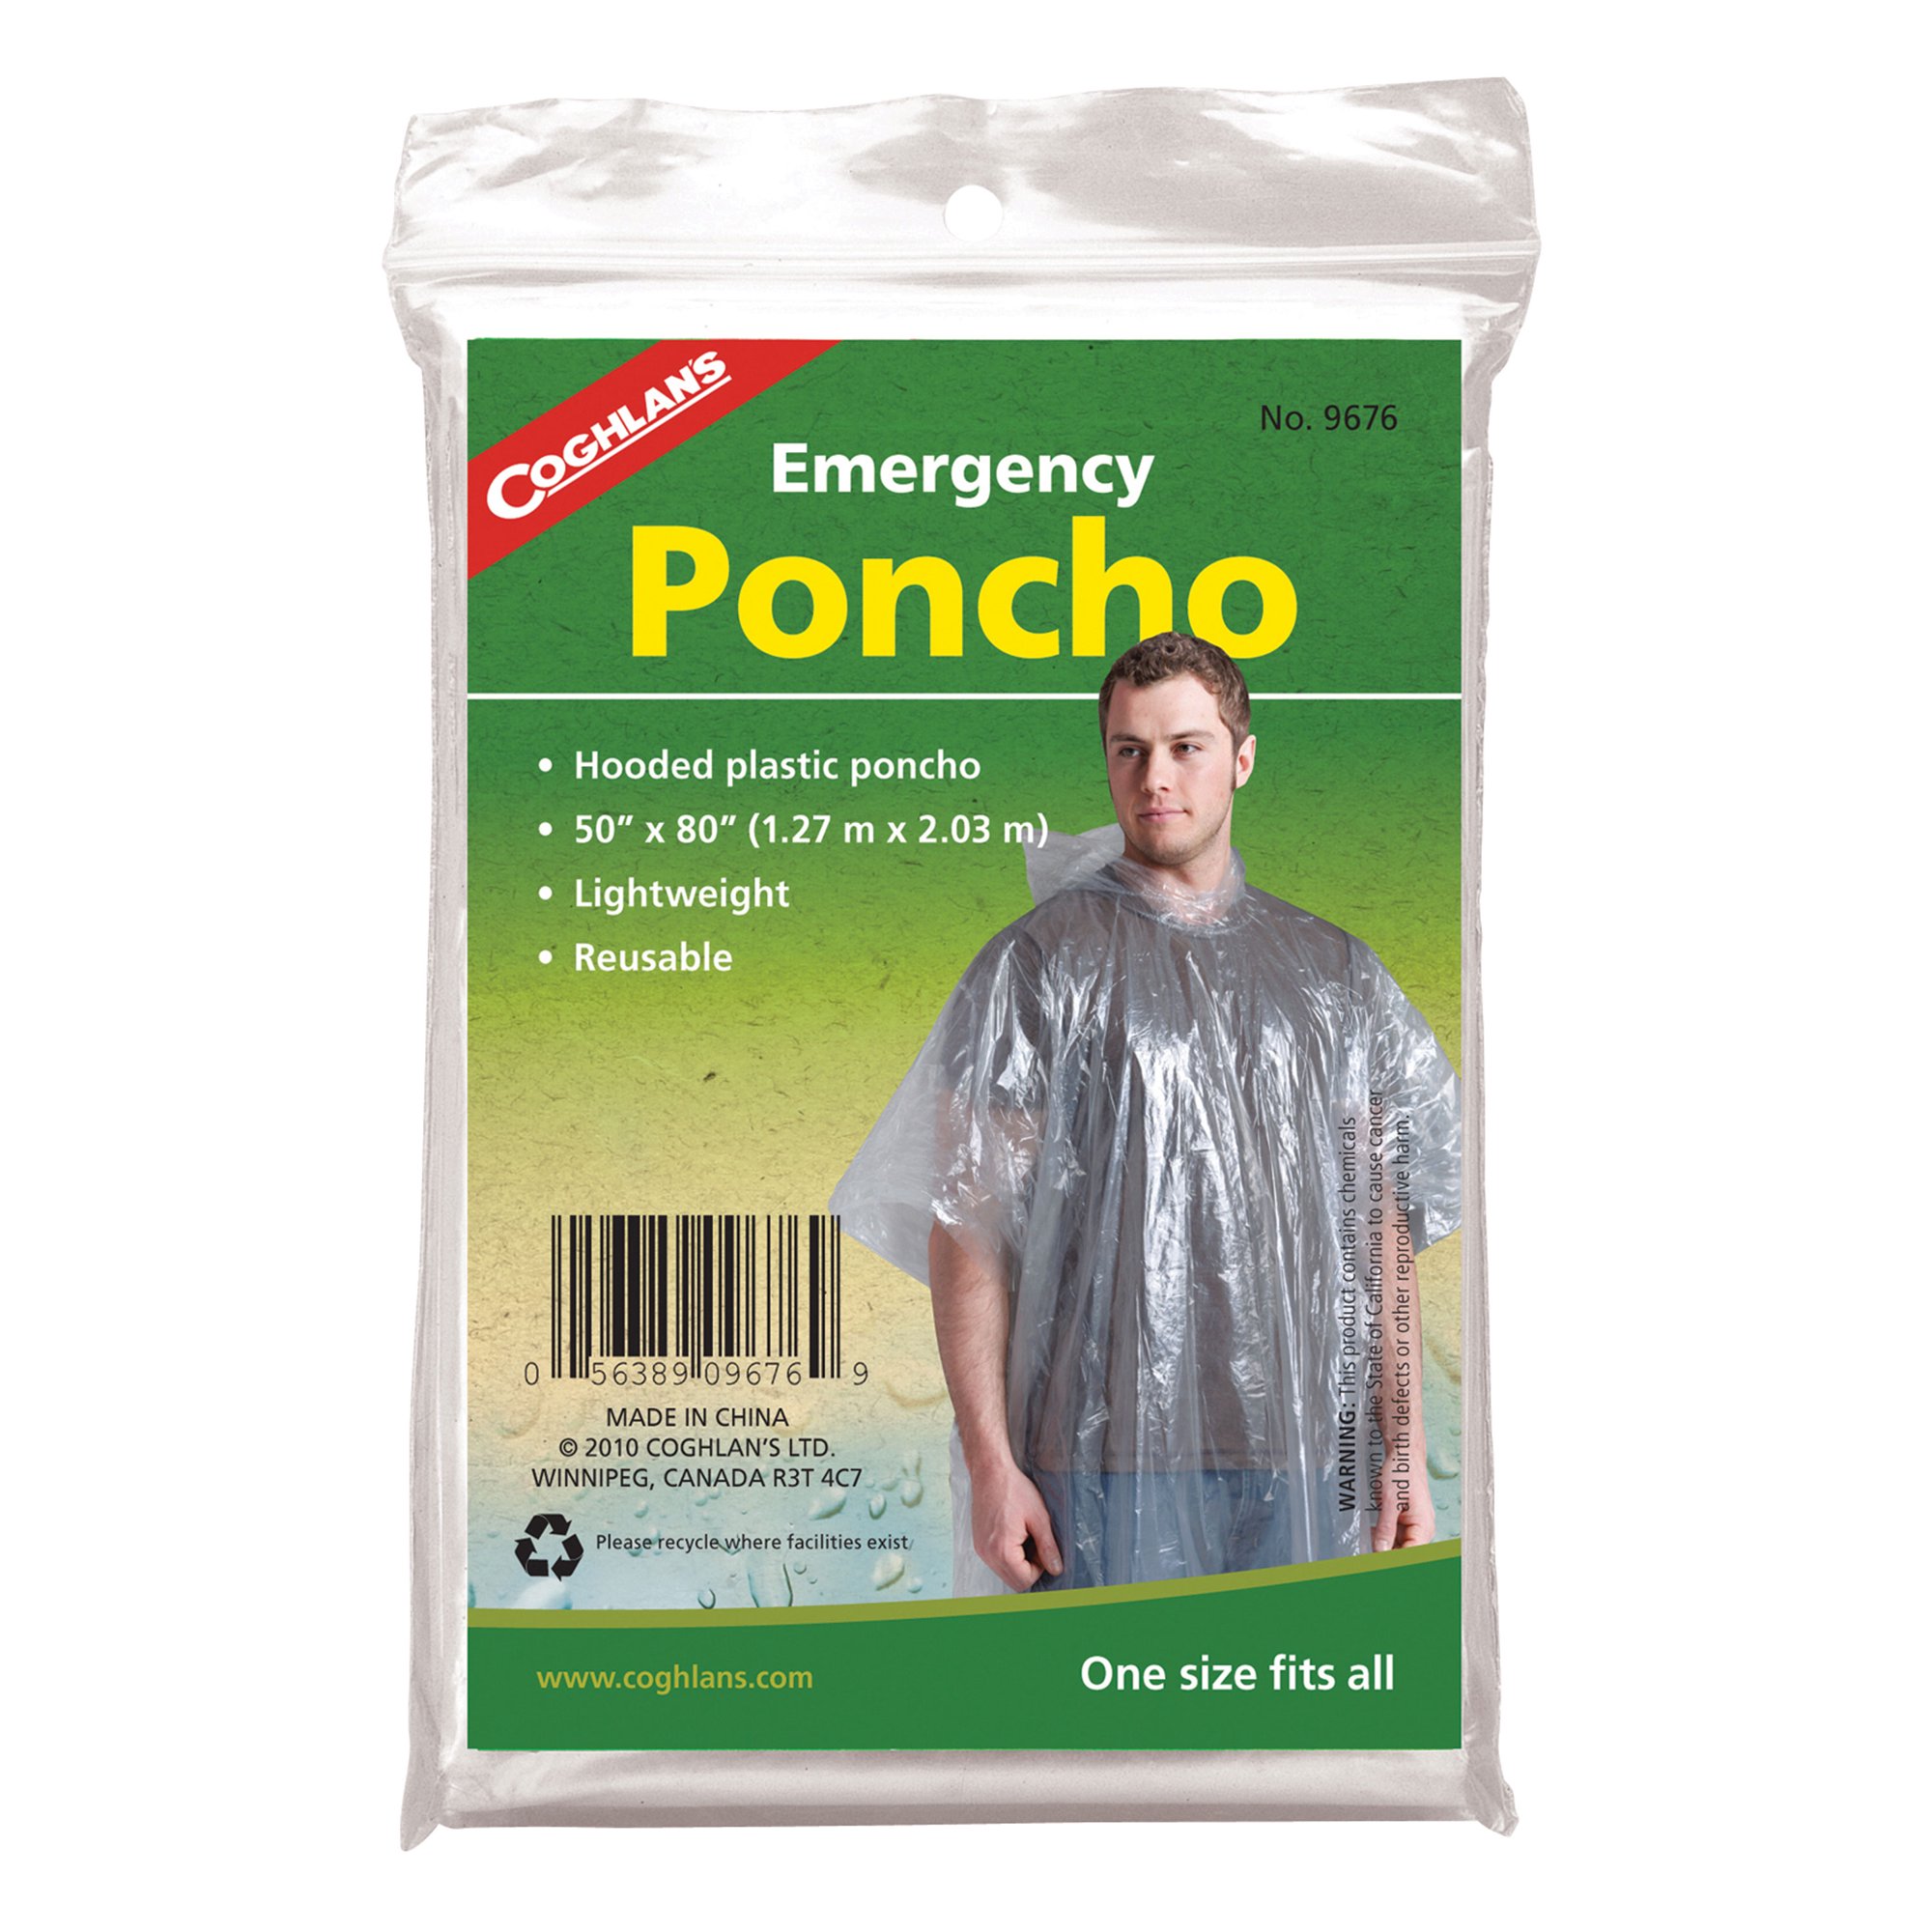 Coghlan's Emergency Poncho - $1.42 Walmart